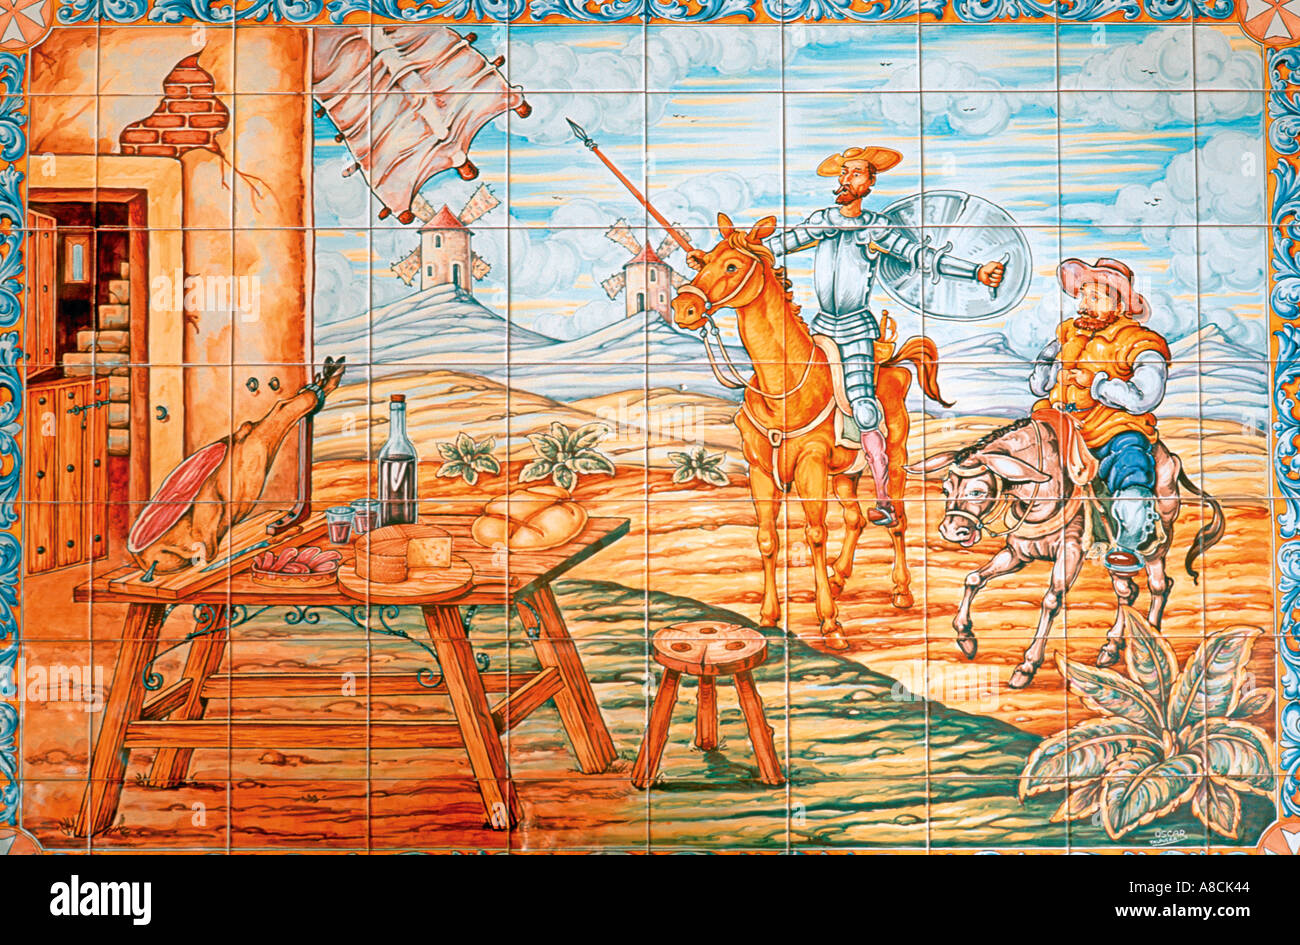 La pittura di piastrelle con scene del libro Don Quijote de la Mancha Cafetaria El Mirador de la Mancha Templeque Castilla La Mancha Foto Stock